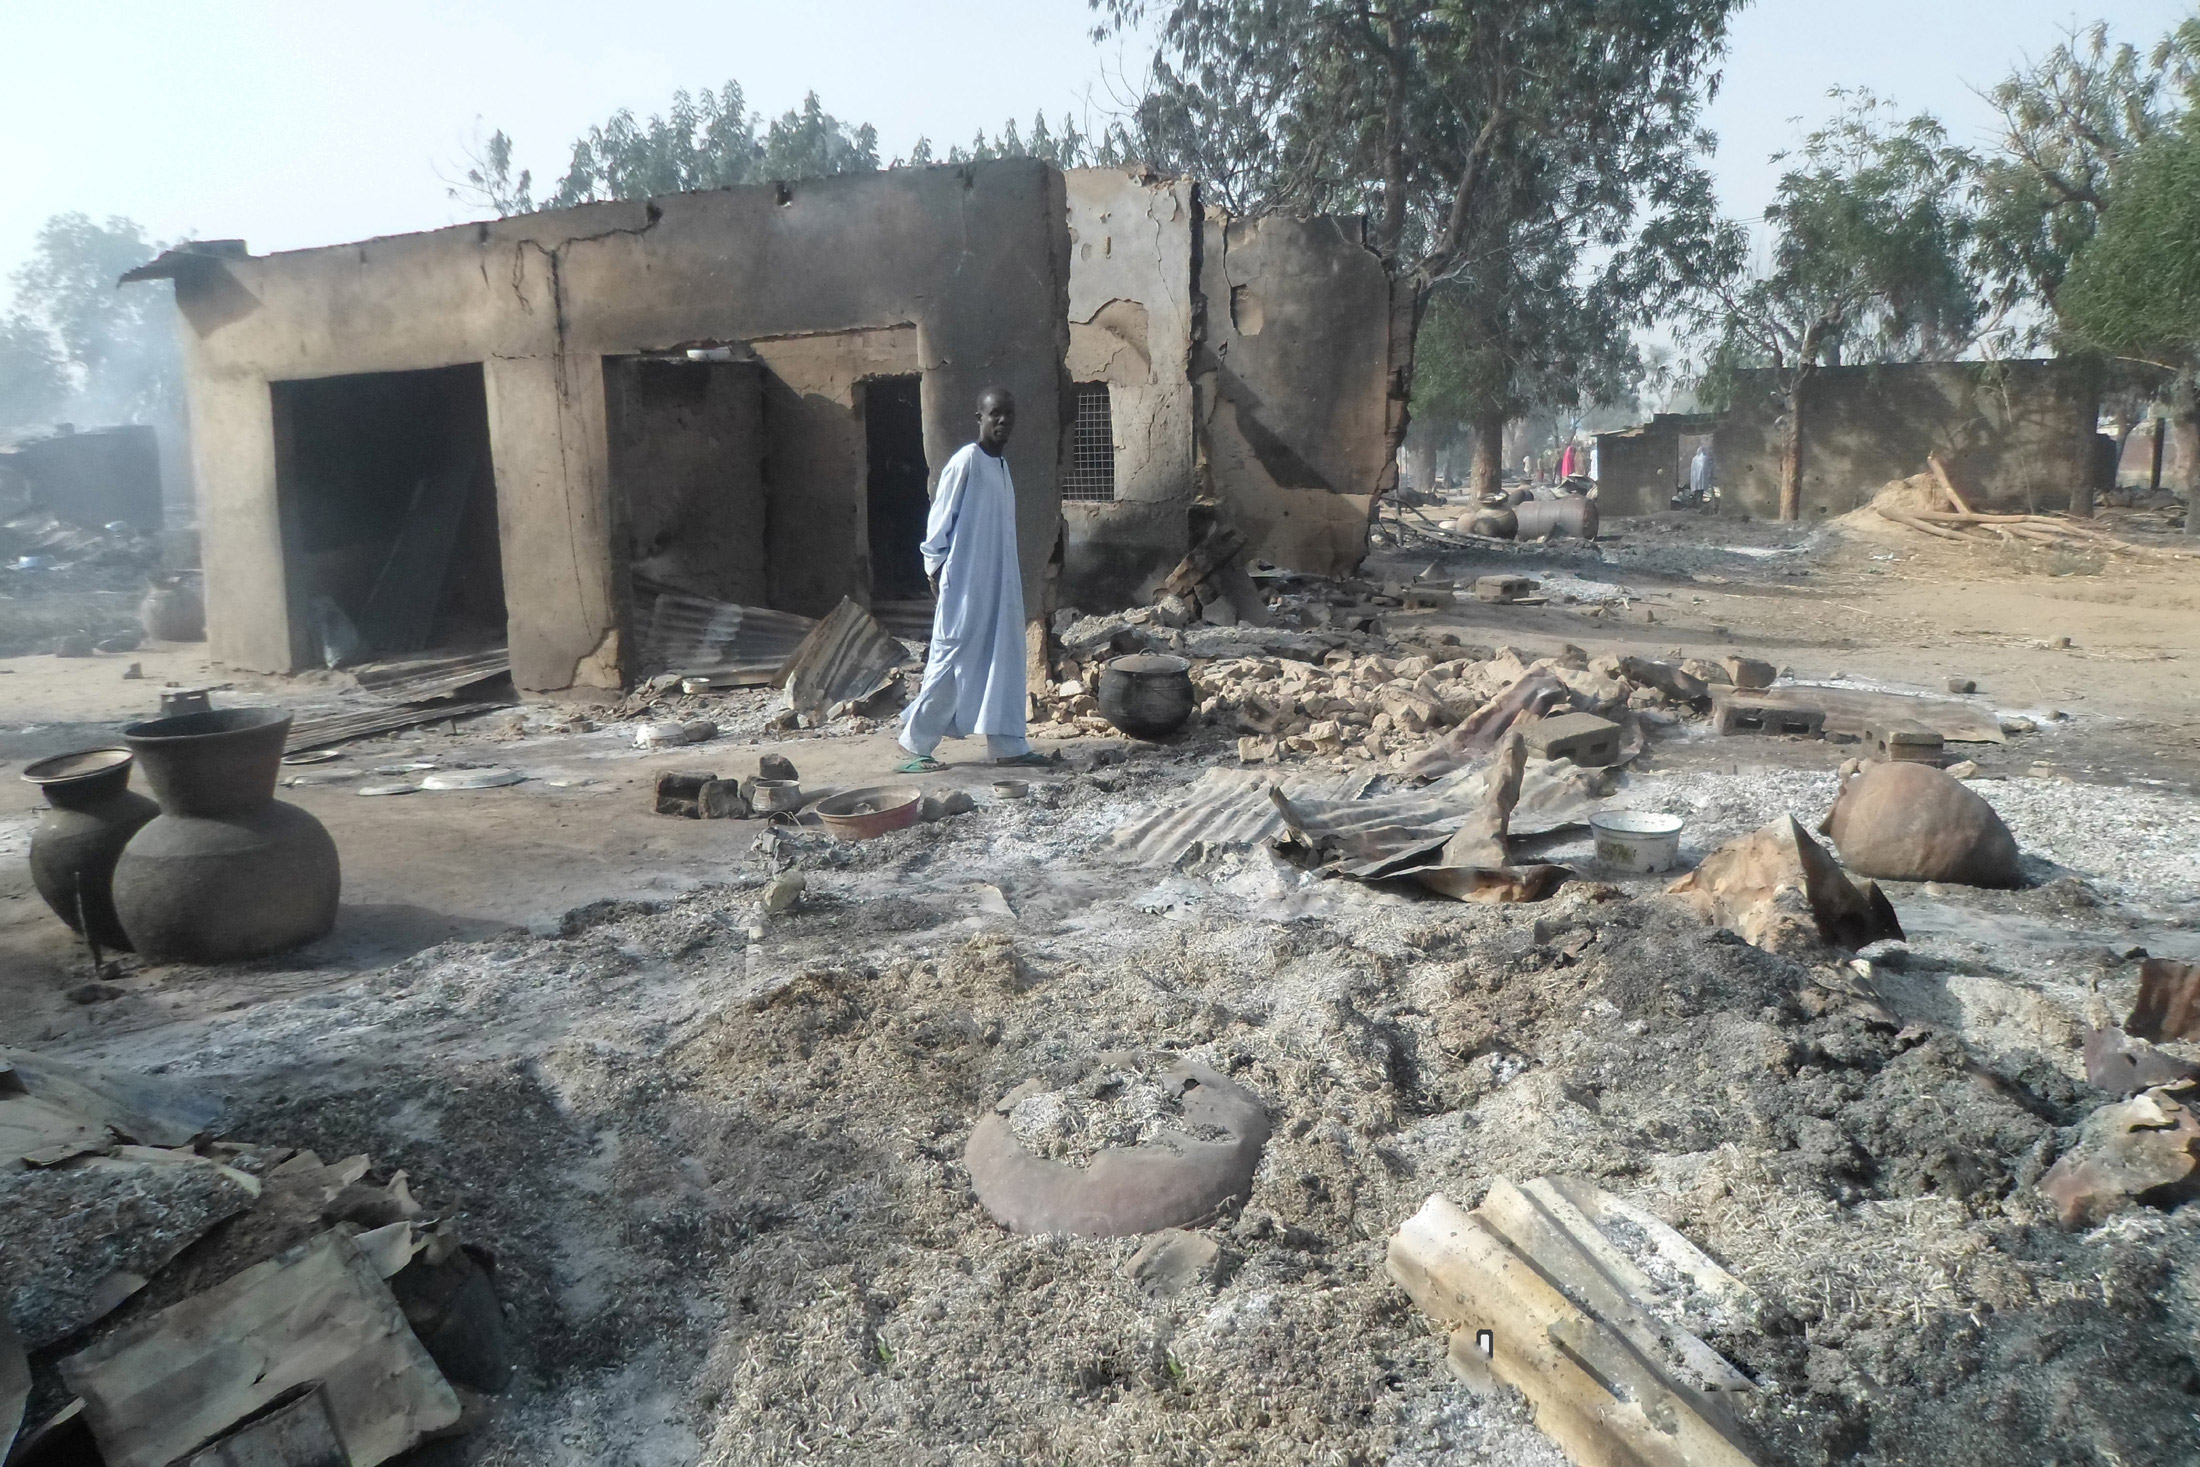 A man walks past burnt out houses following an attack by Boko Haram in the village of Dalori near Maiduguri, Nigeria, Jan. 31, 2016. (Jossy Ola—AP)